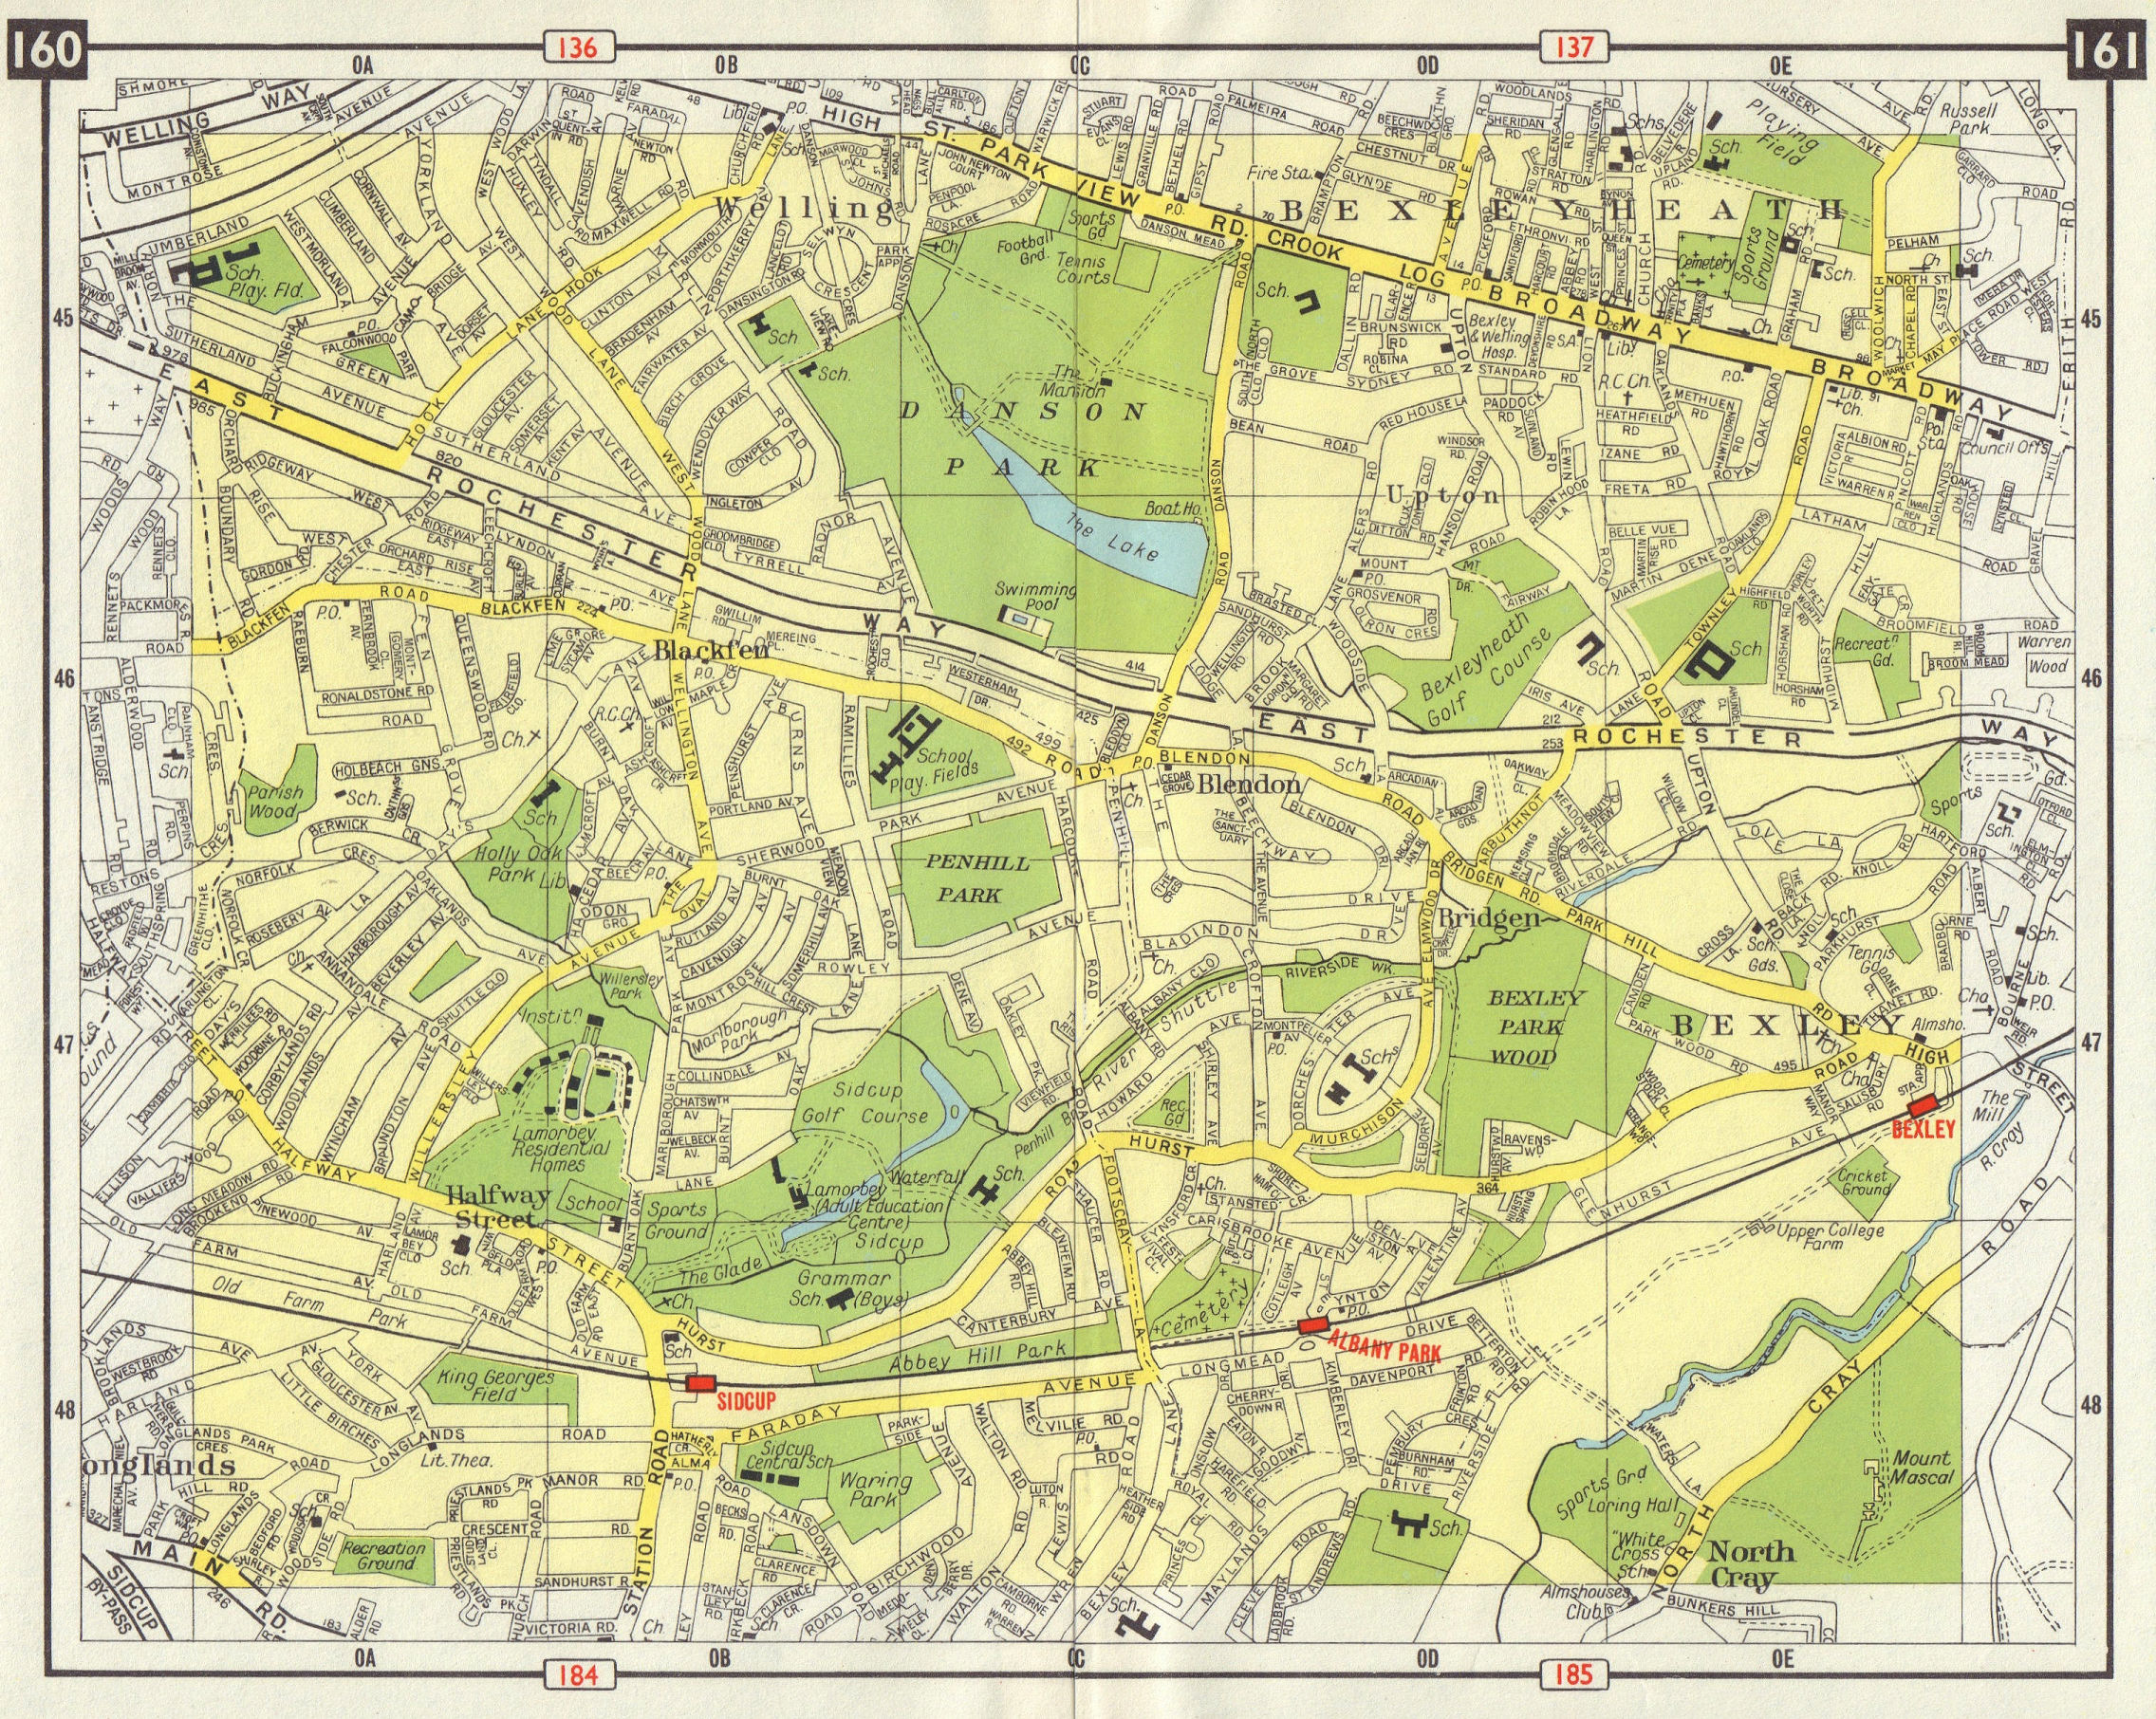 SE LONDON Blackfen Bexleyheath Blendon Albany Park Bexley North Cray 1965 map